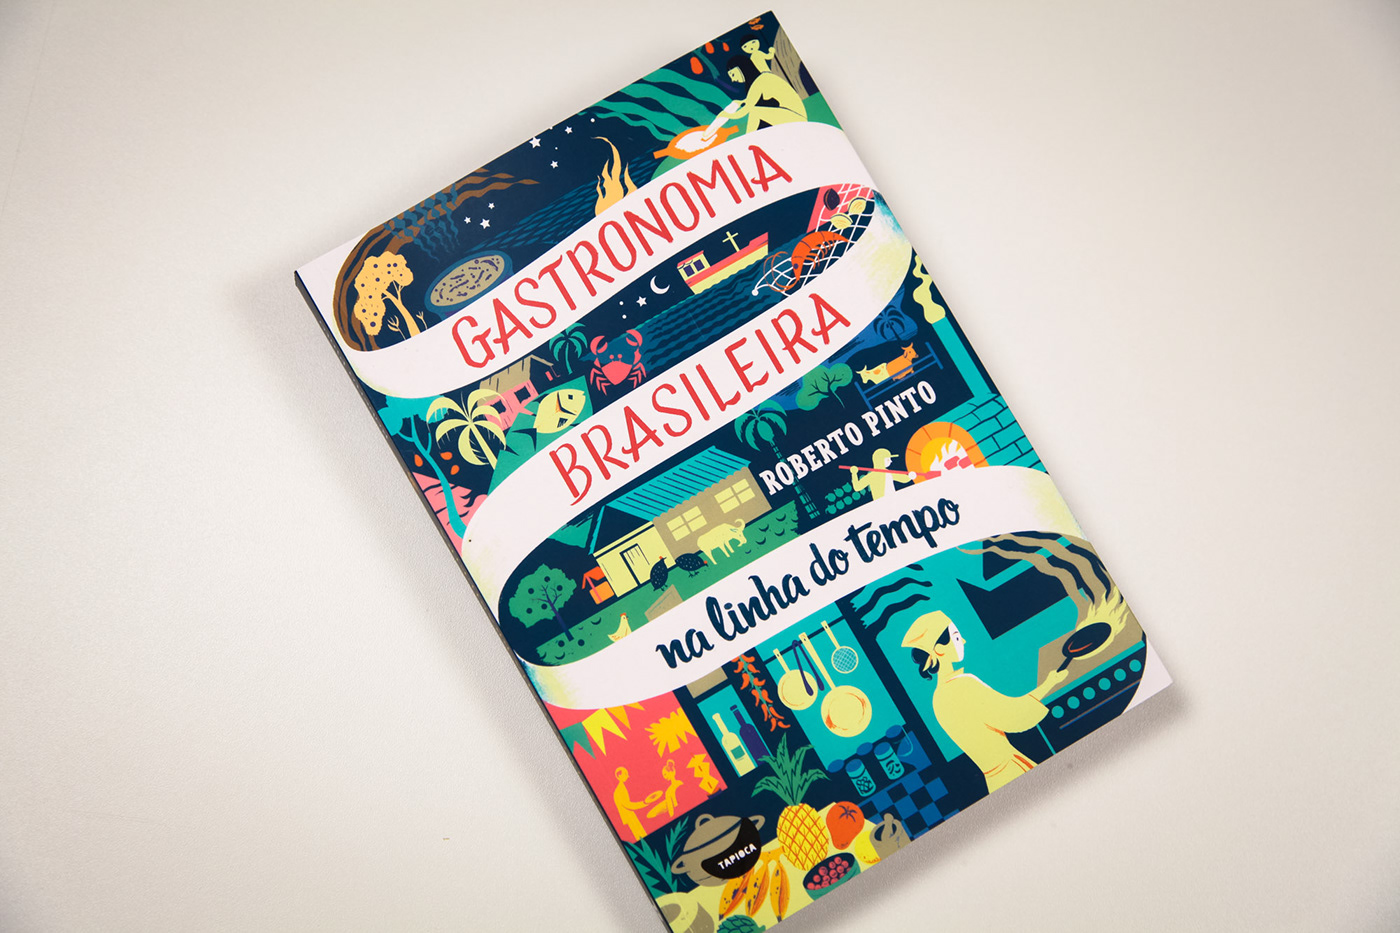 book cover gastronomy Brazil brazilian cuisine Food  #Bookillustration #bookcover #bookcoverillustration #foodillustration